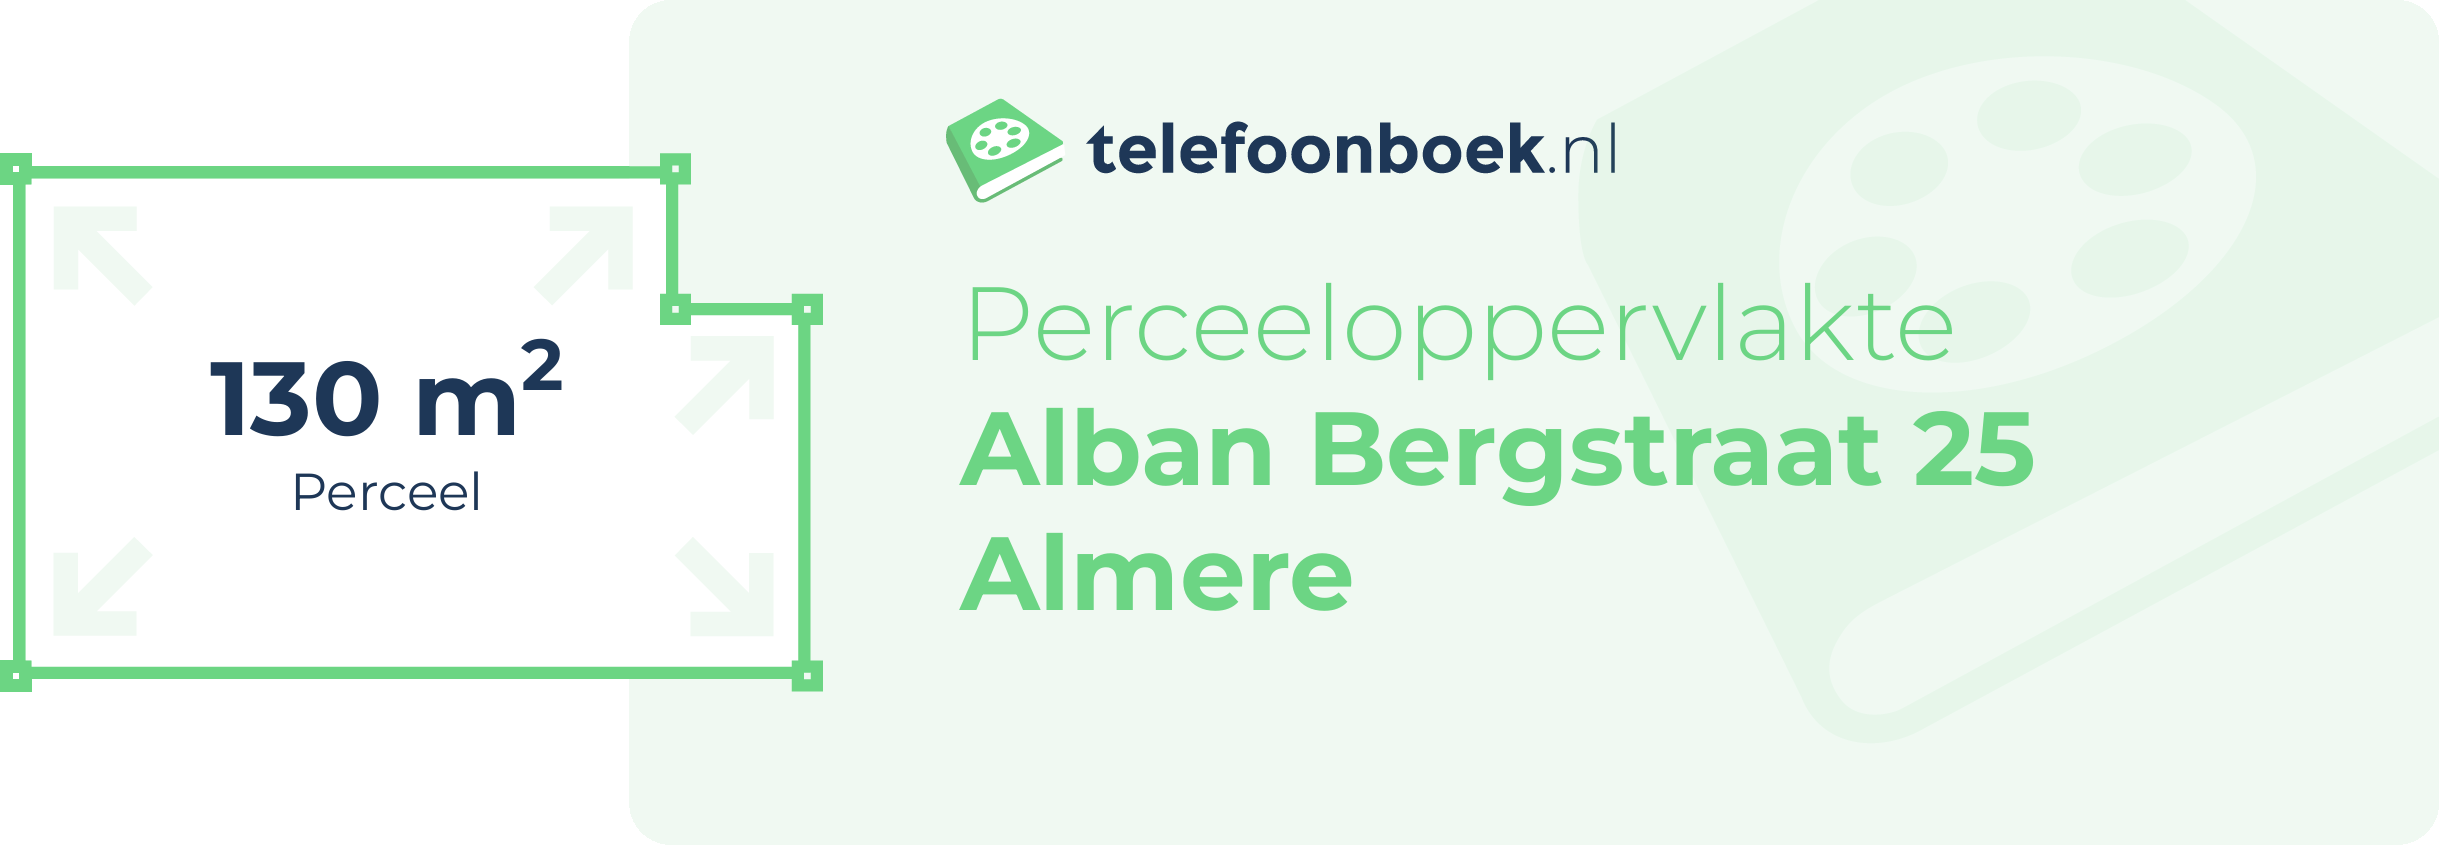 Perceeloppervlakte Alban Bergstraat 25 Almere